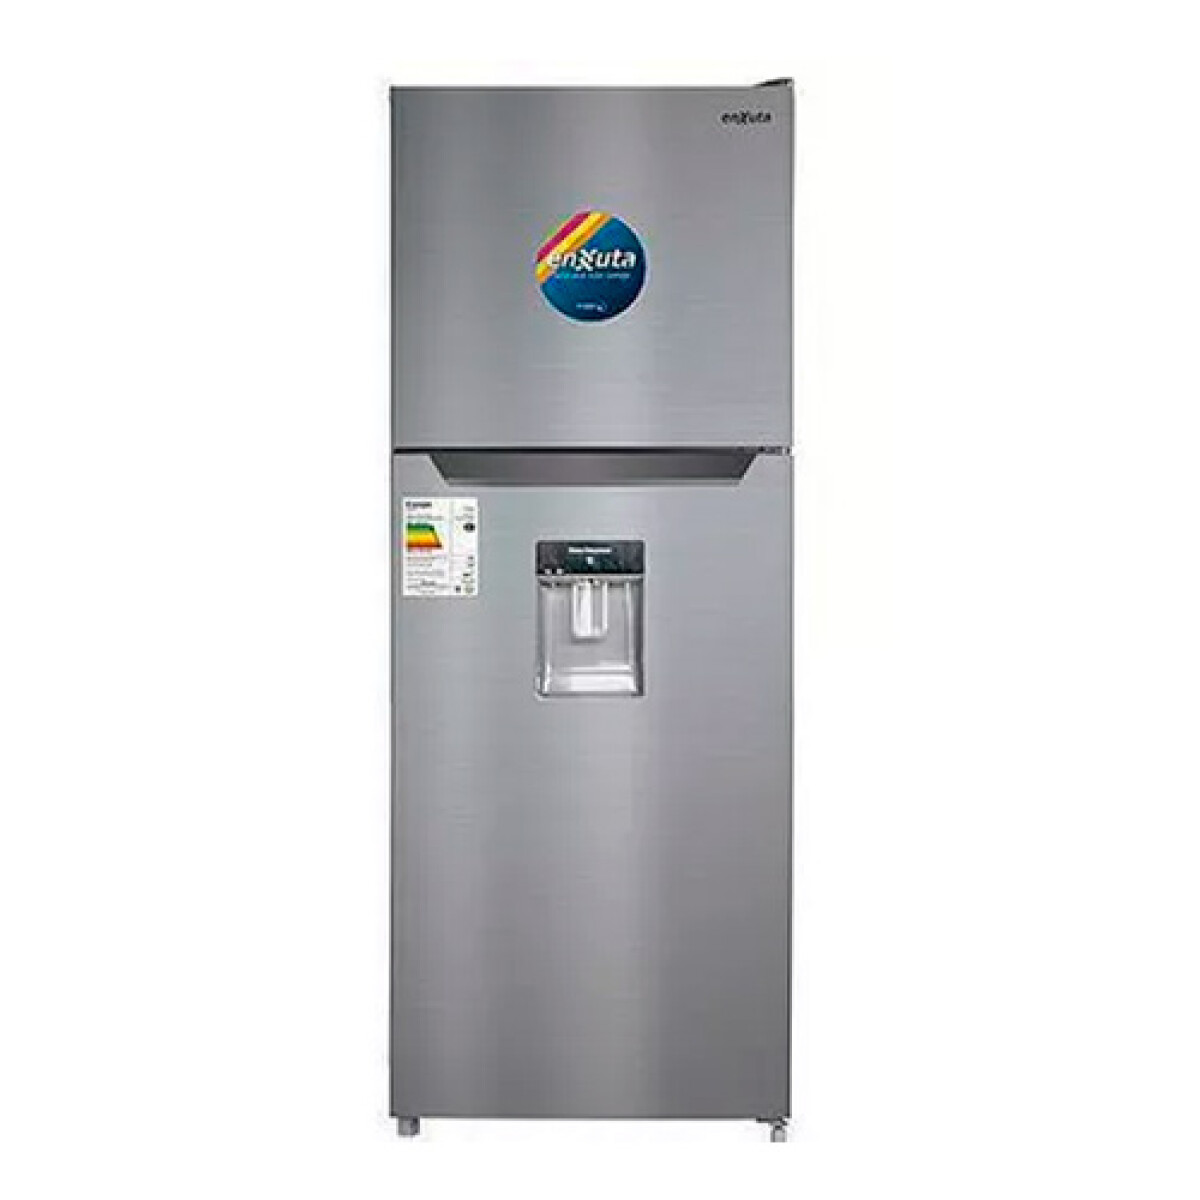 Refrigerador Frio Seco Enxuta Renx1350di Inox 345lts Gtia Of 